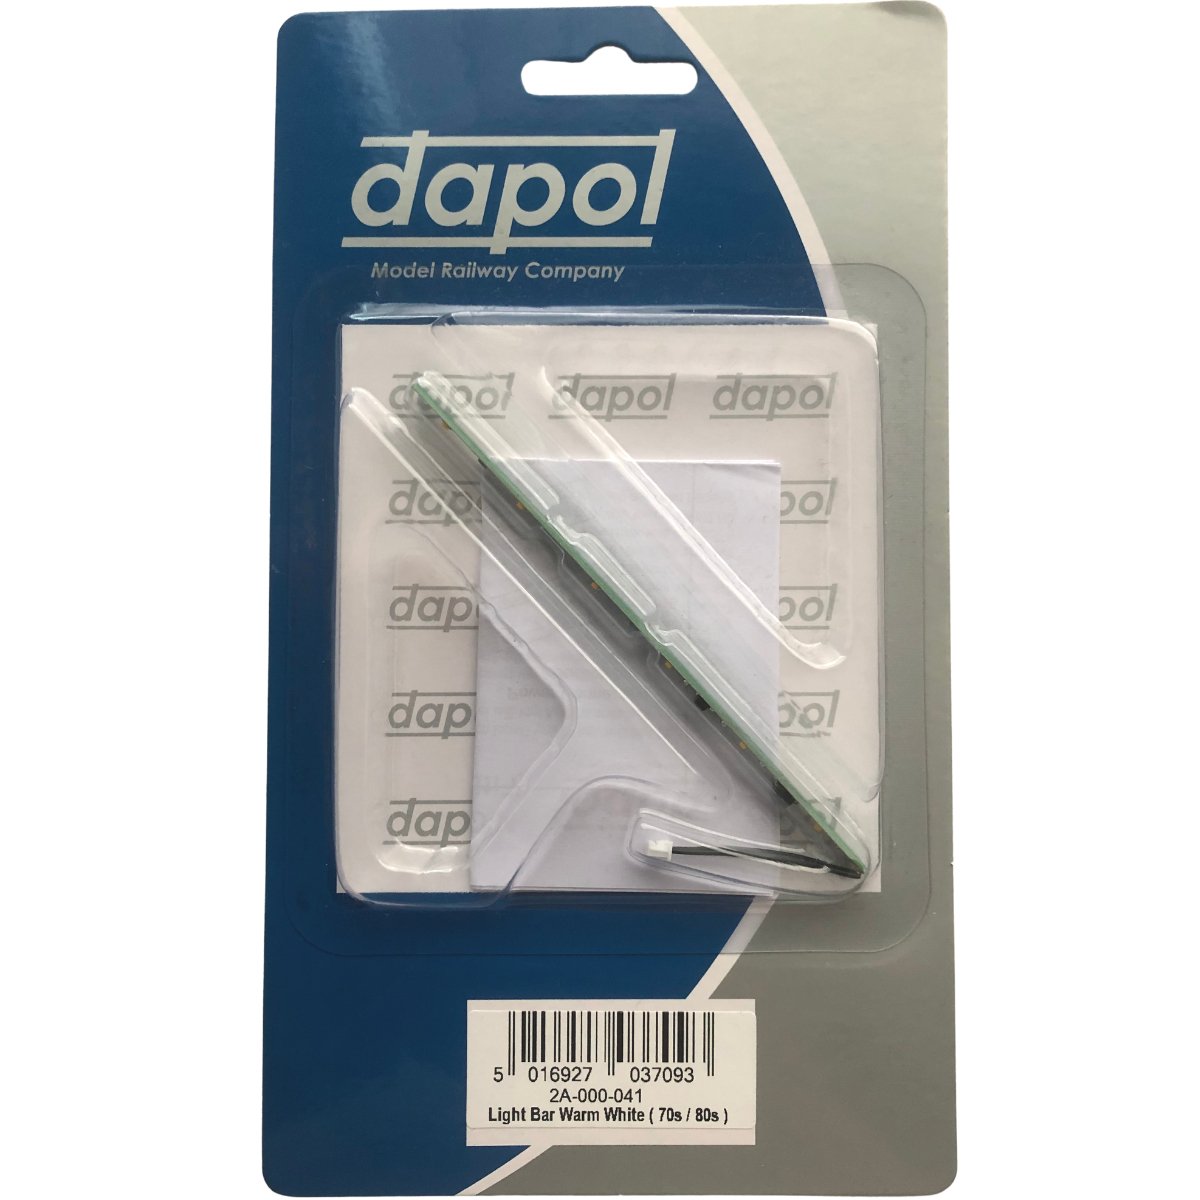 Dapol 2A-000-041 N Gauge Light Bar Warm White (70s/80s)